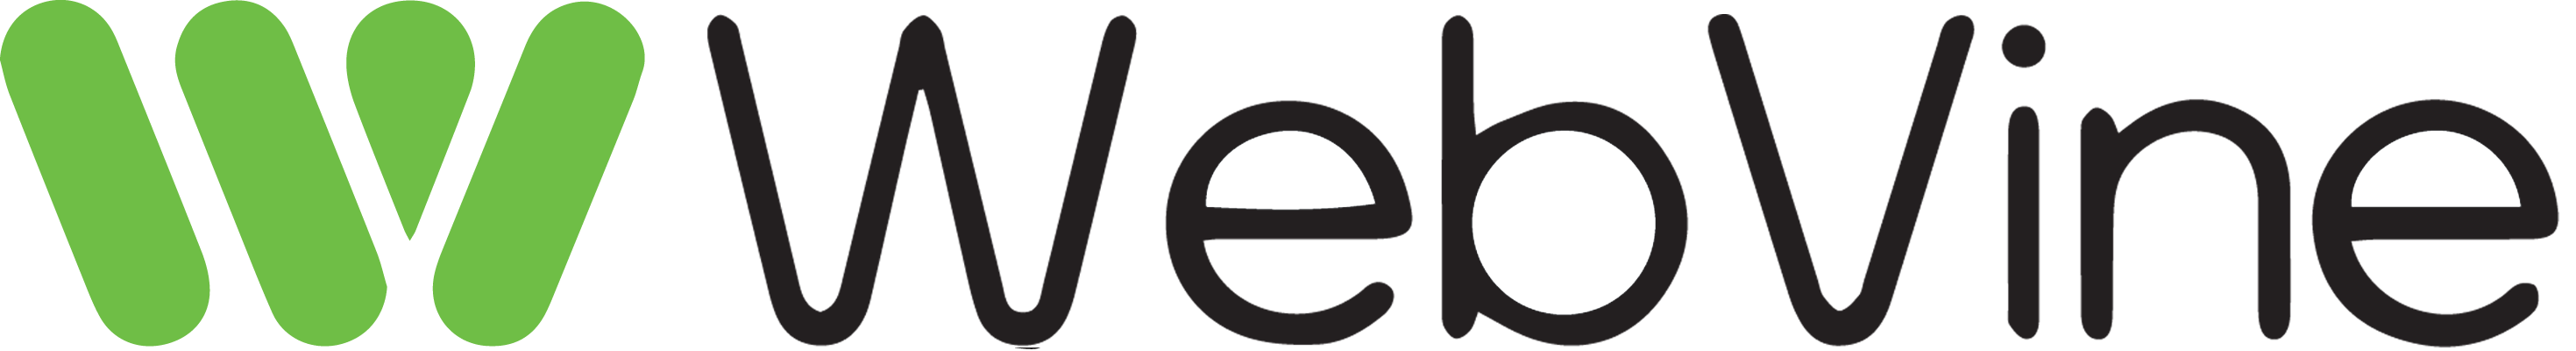 webvine-logo